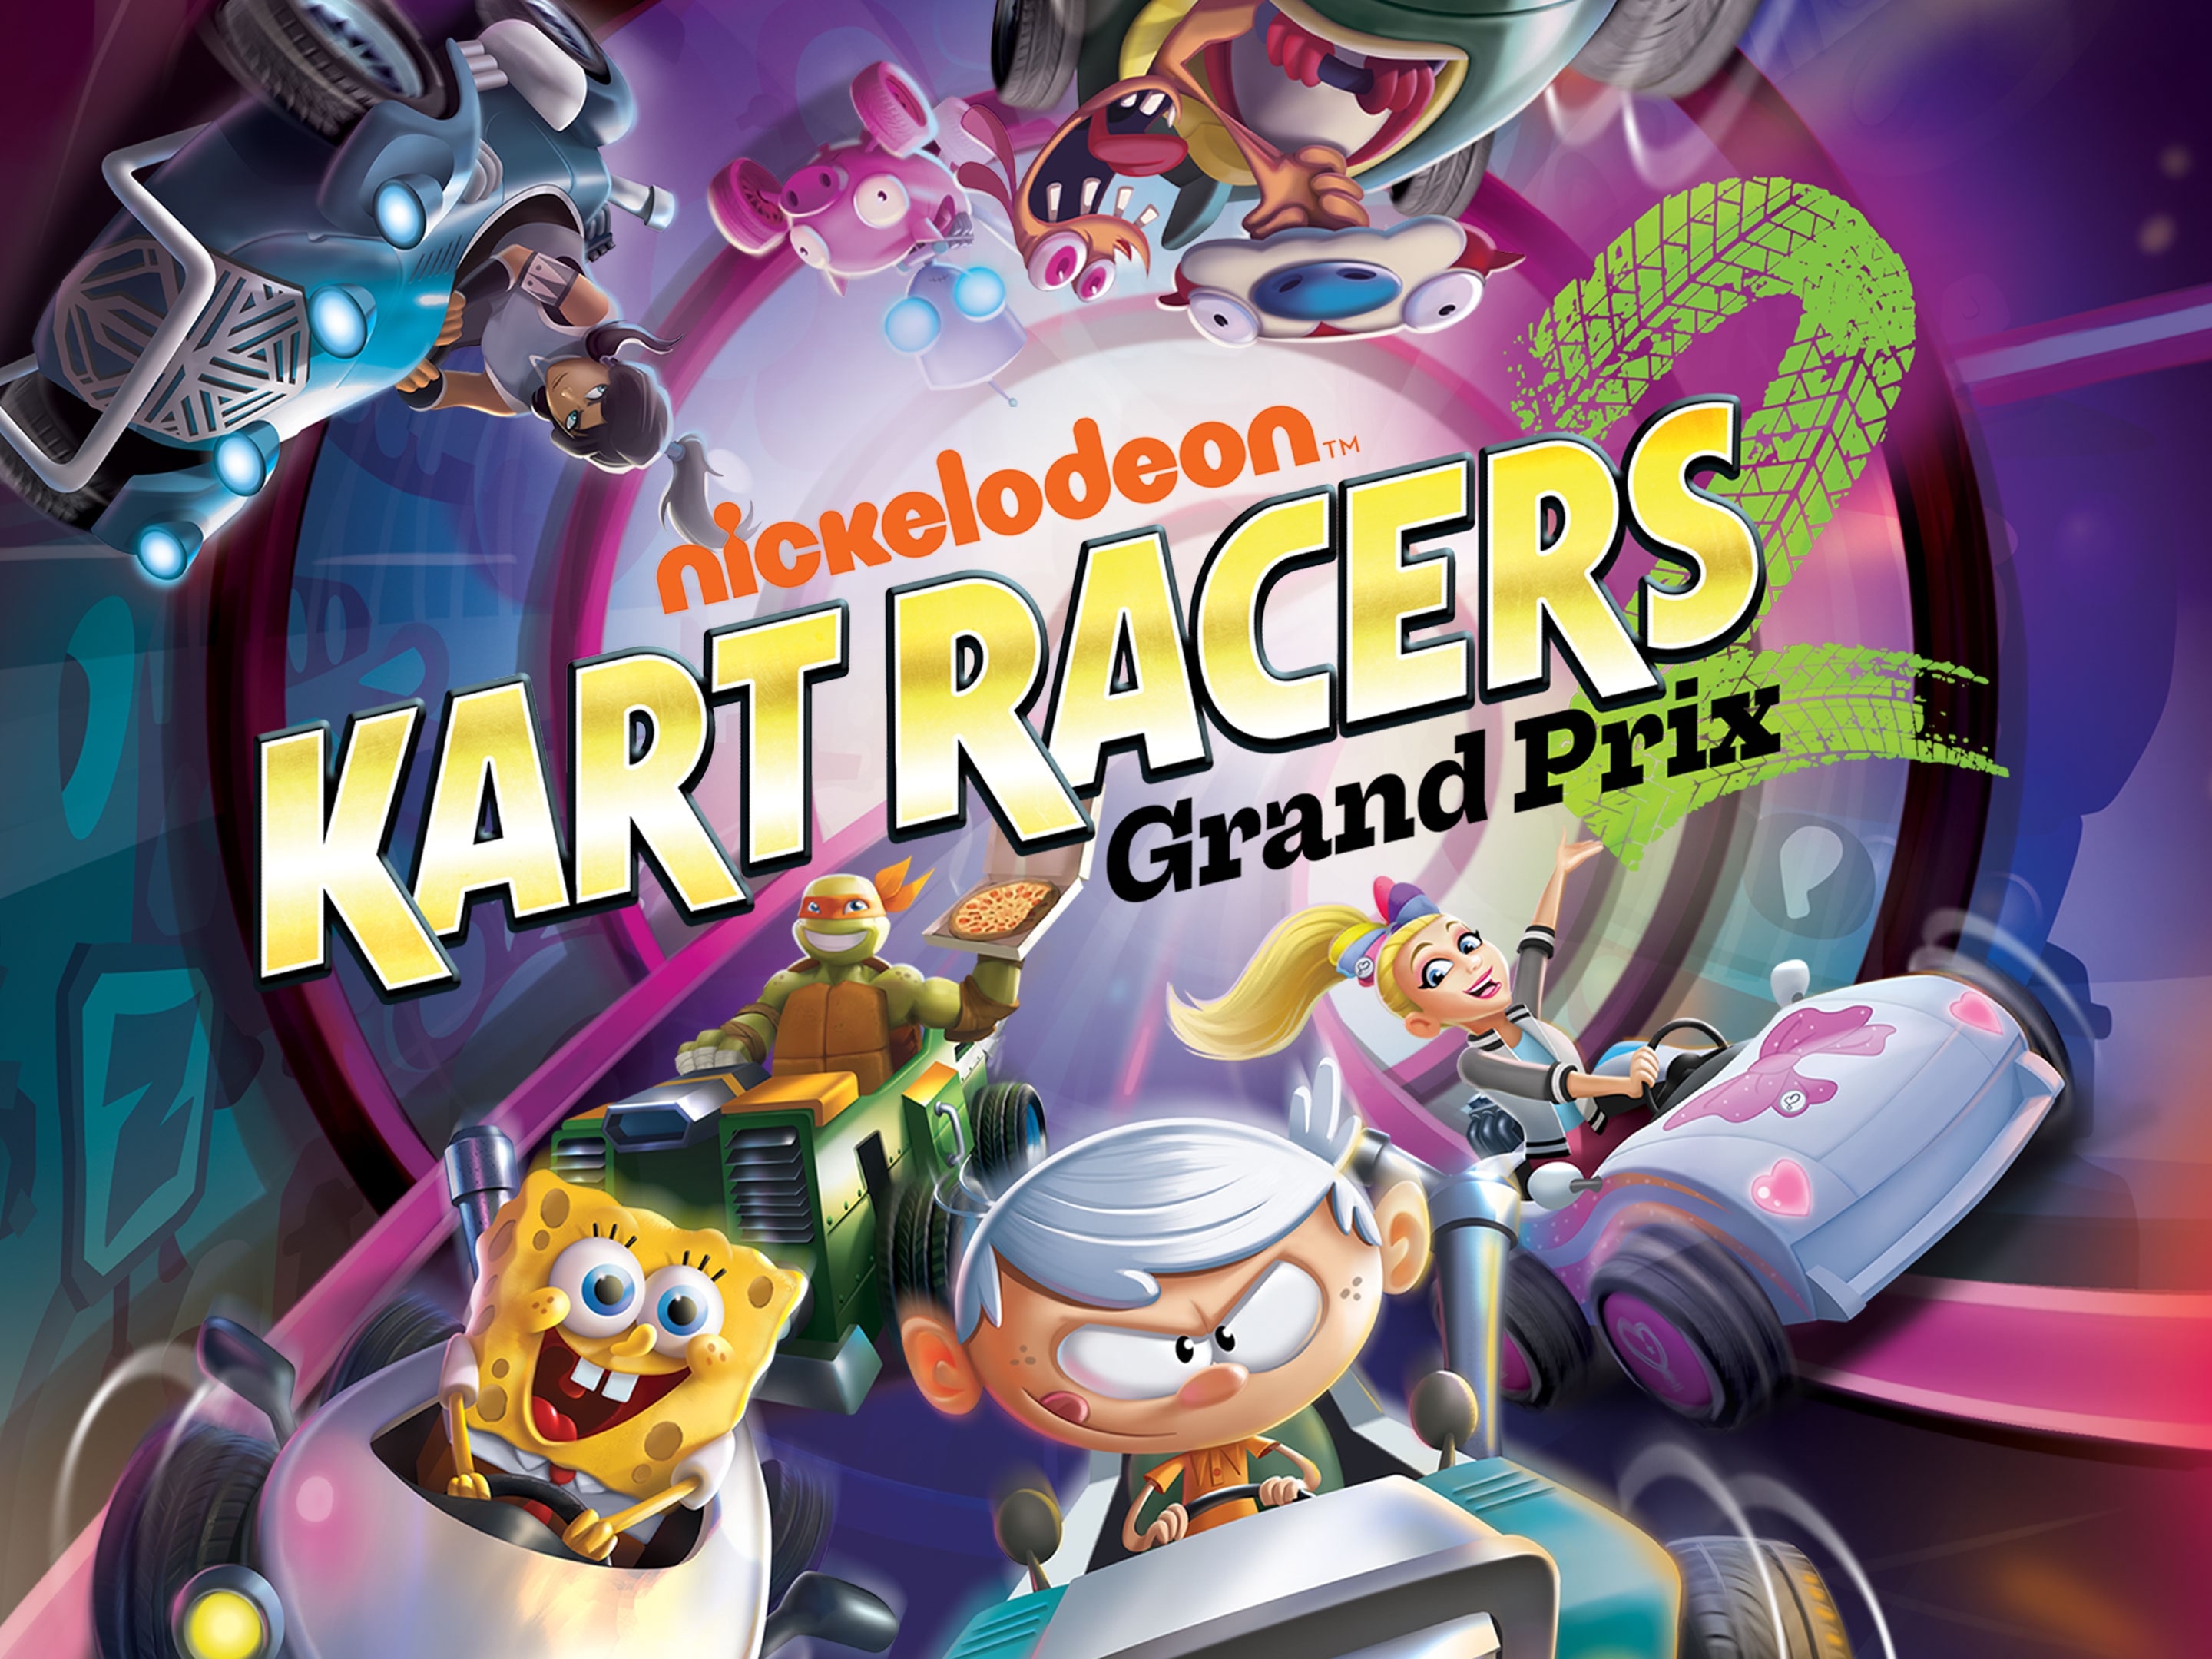 Nickelodeon Racers Grand Prix